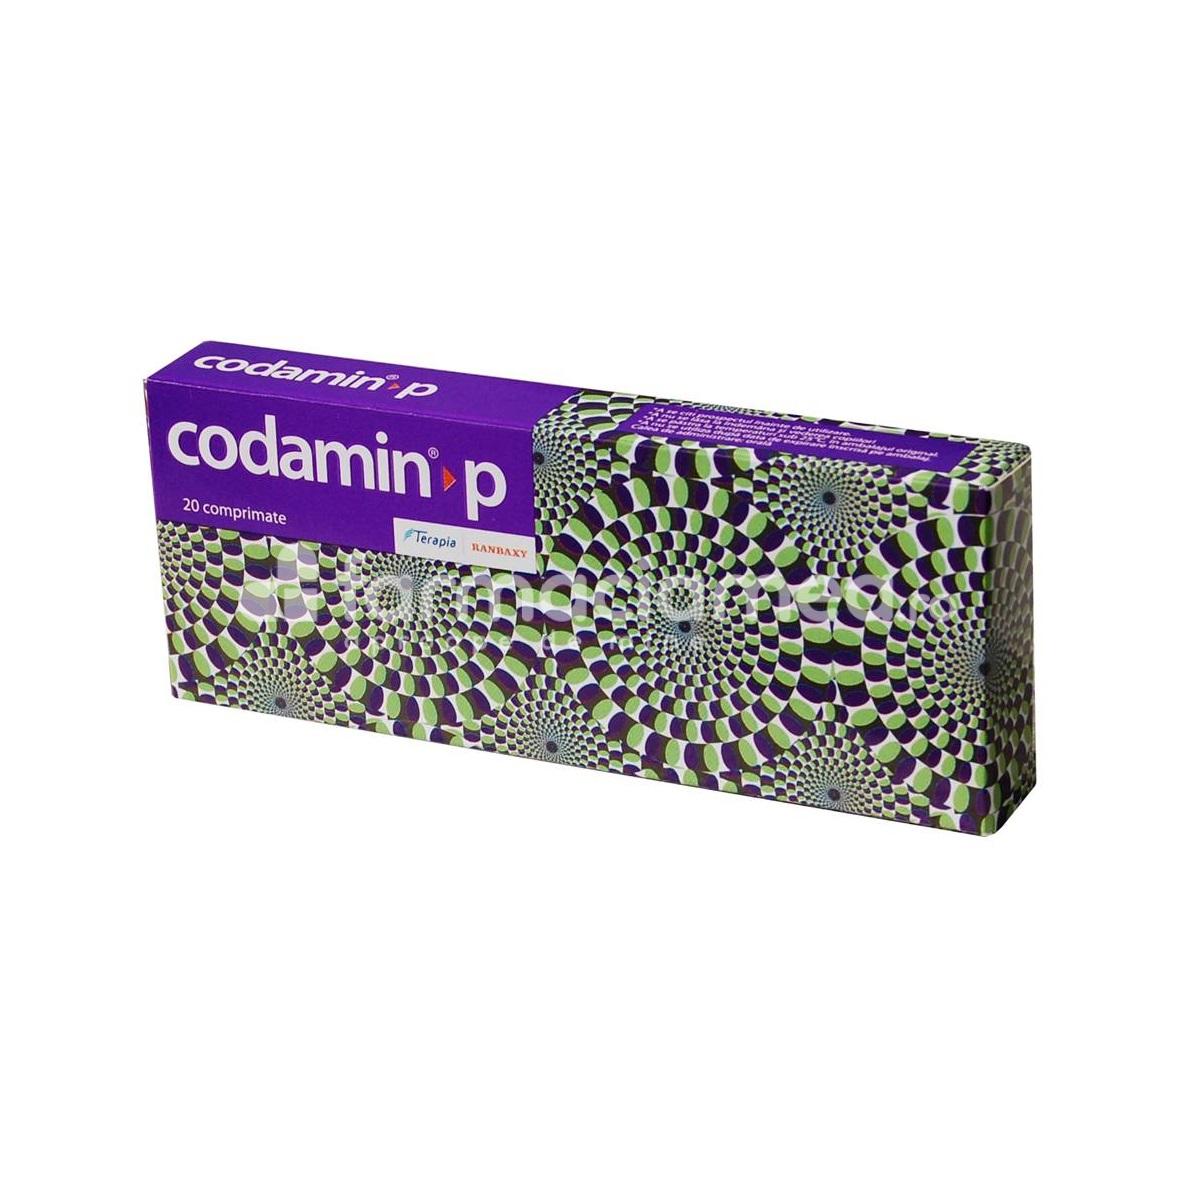 Durere OTC - Codamin P, contine paracetamol, cafeina si codeina, cu efect analgezic, indicat in combaterea durerii, 20 de comprimate, Terapia, farmaciamea.ro